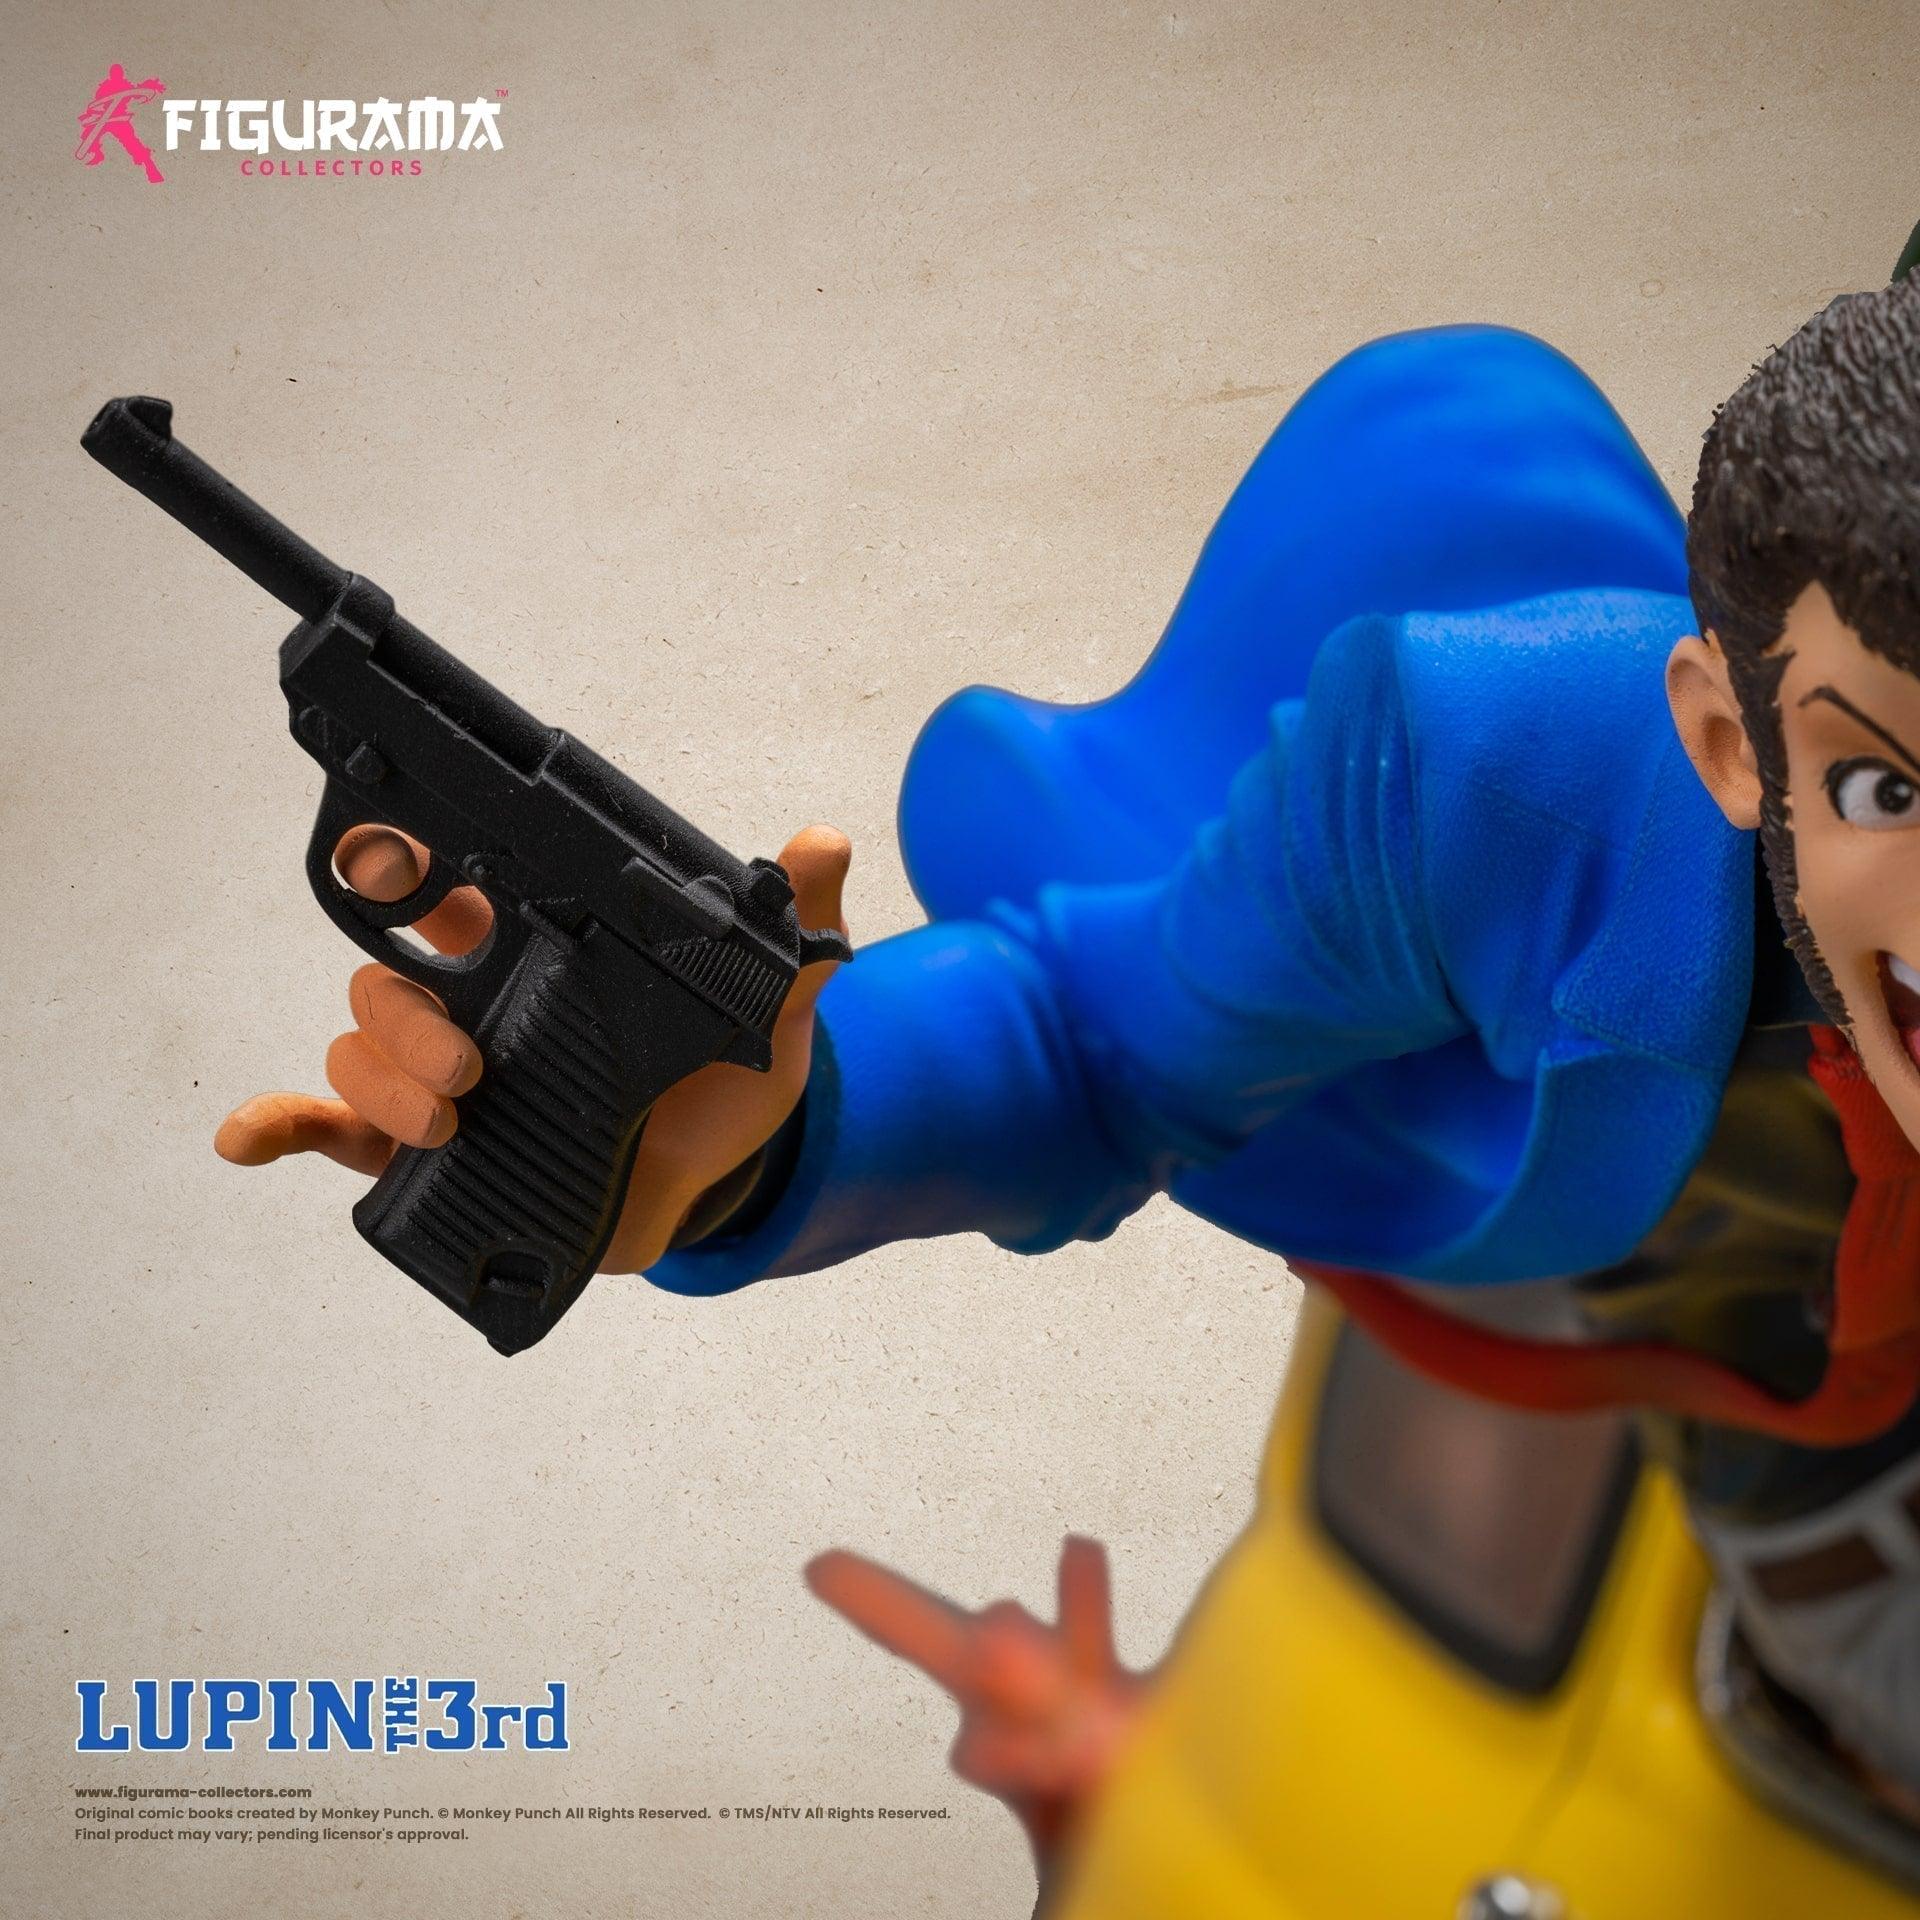 Plan-7- Flexible plan 12 Months- Lupin The 3rd- Lupin, Jigen, & Fujiko Figure Resin Figures Figurama Collectors 